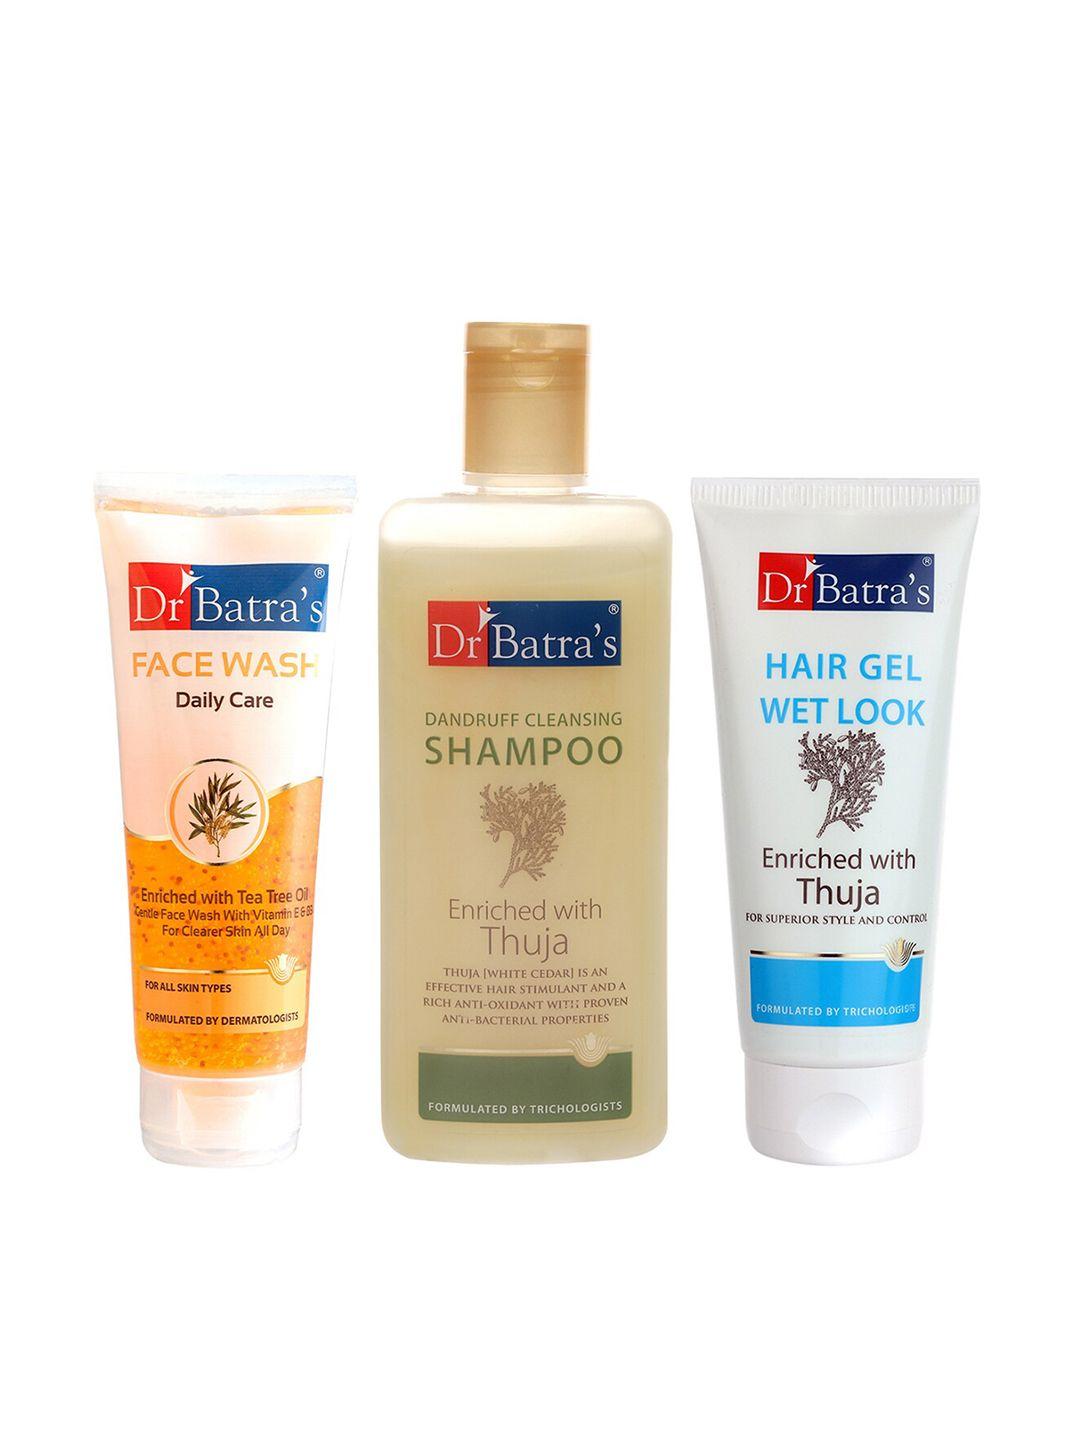 dr batra's dandruff cleansing shampoo, hair gel and face wash